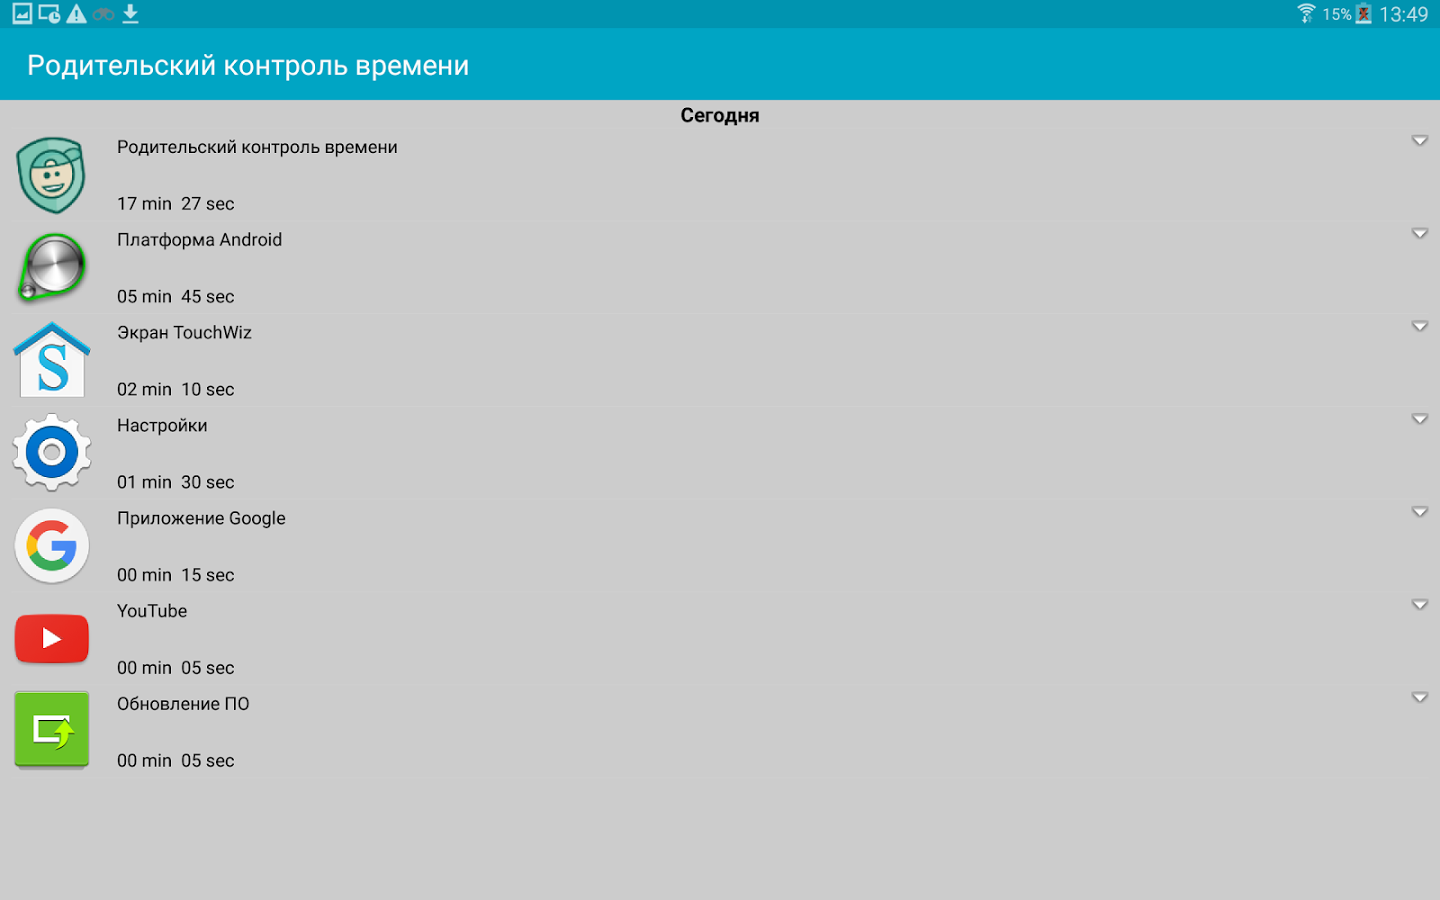 https://trashbox.ru/ifiles/553833_6c49c2_screenshot_09/roditelskij-kontrol-vremeni-1.5.69-10.png